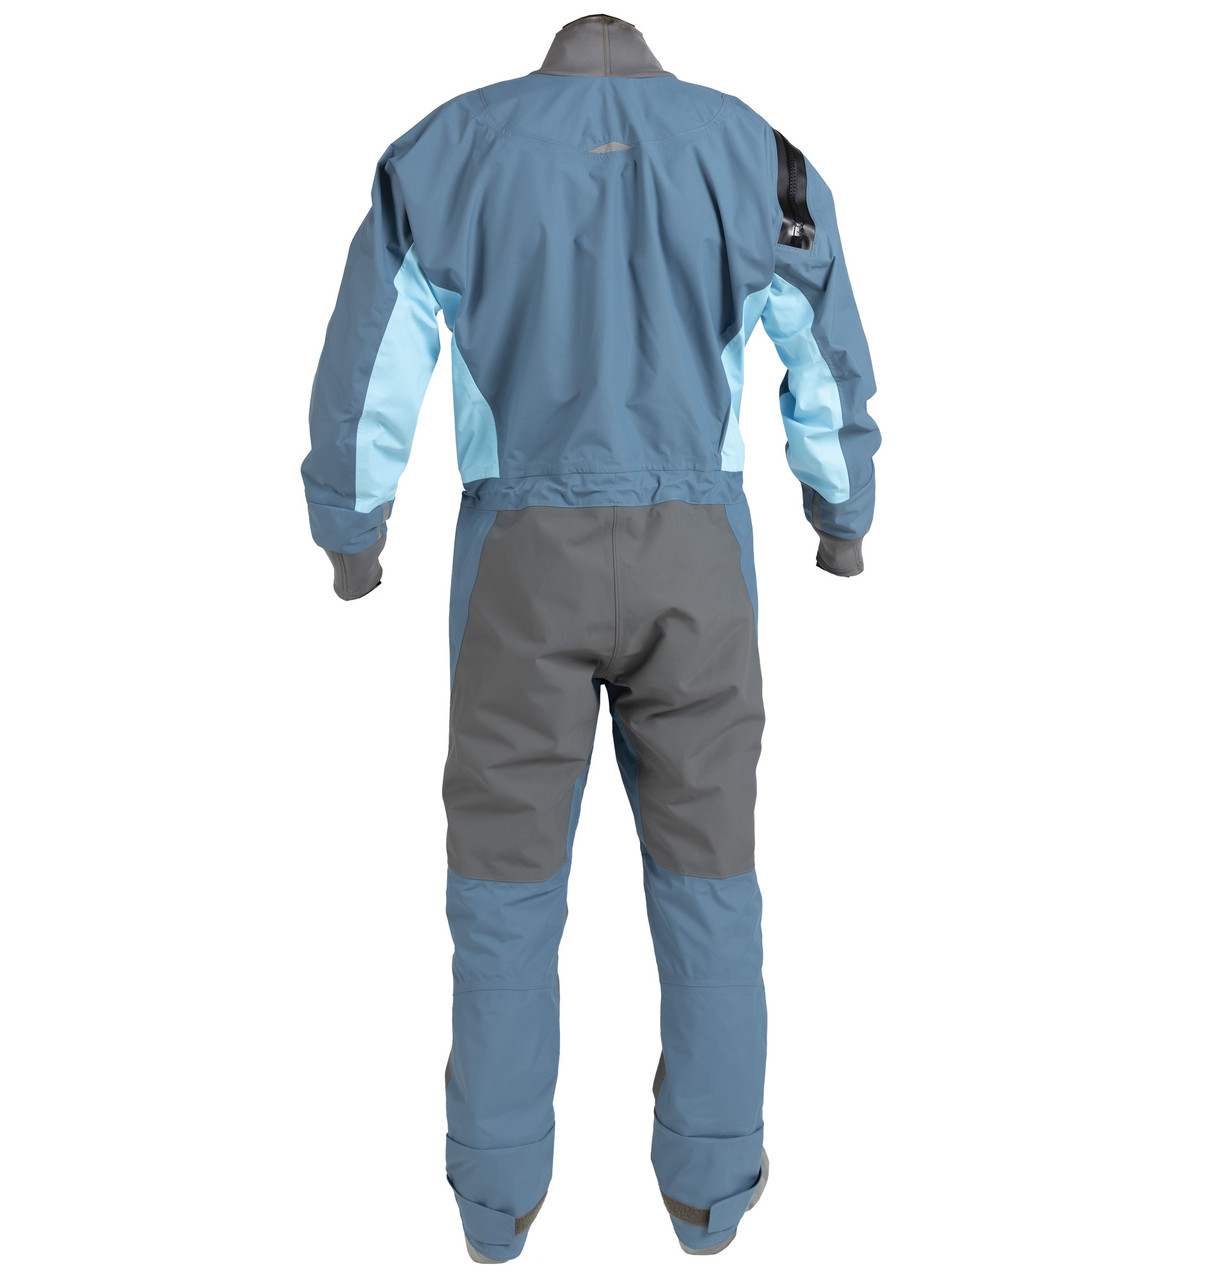 Swift Entry Dry Suit (Hydrus 3.0) - Kokatat